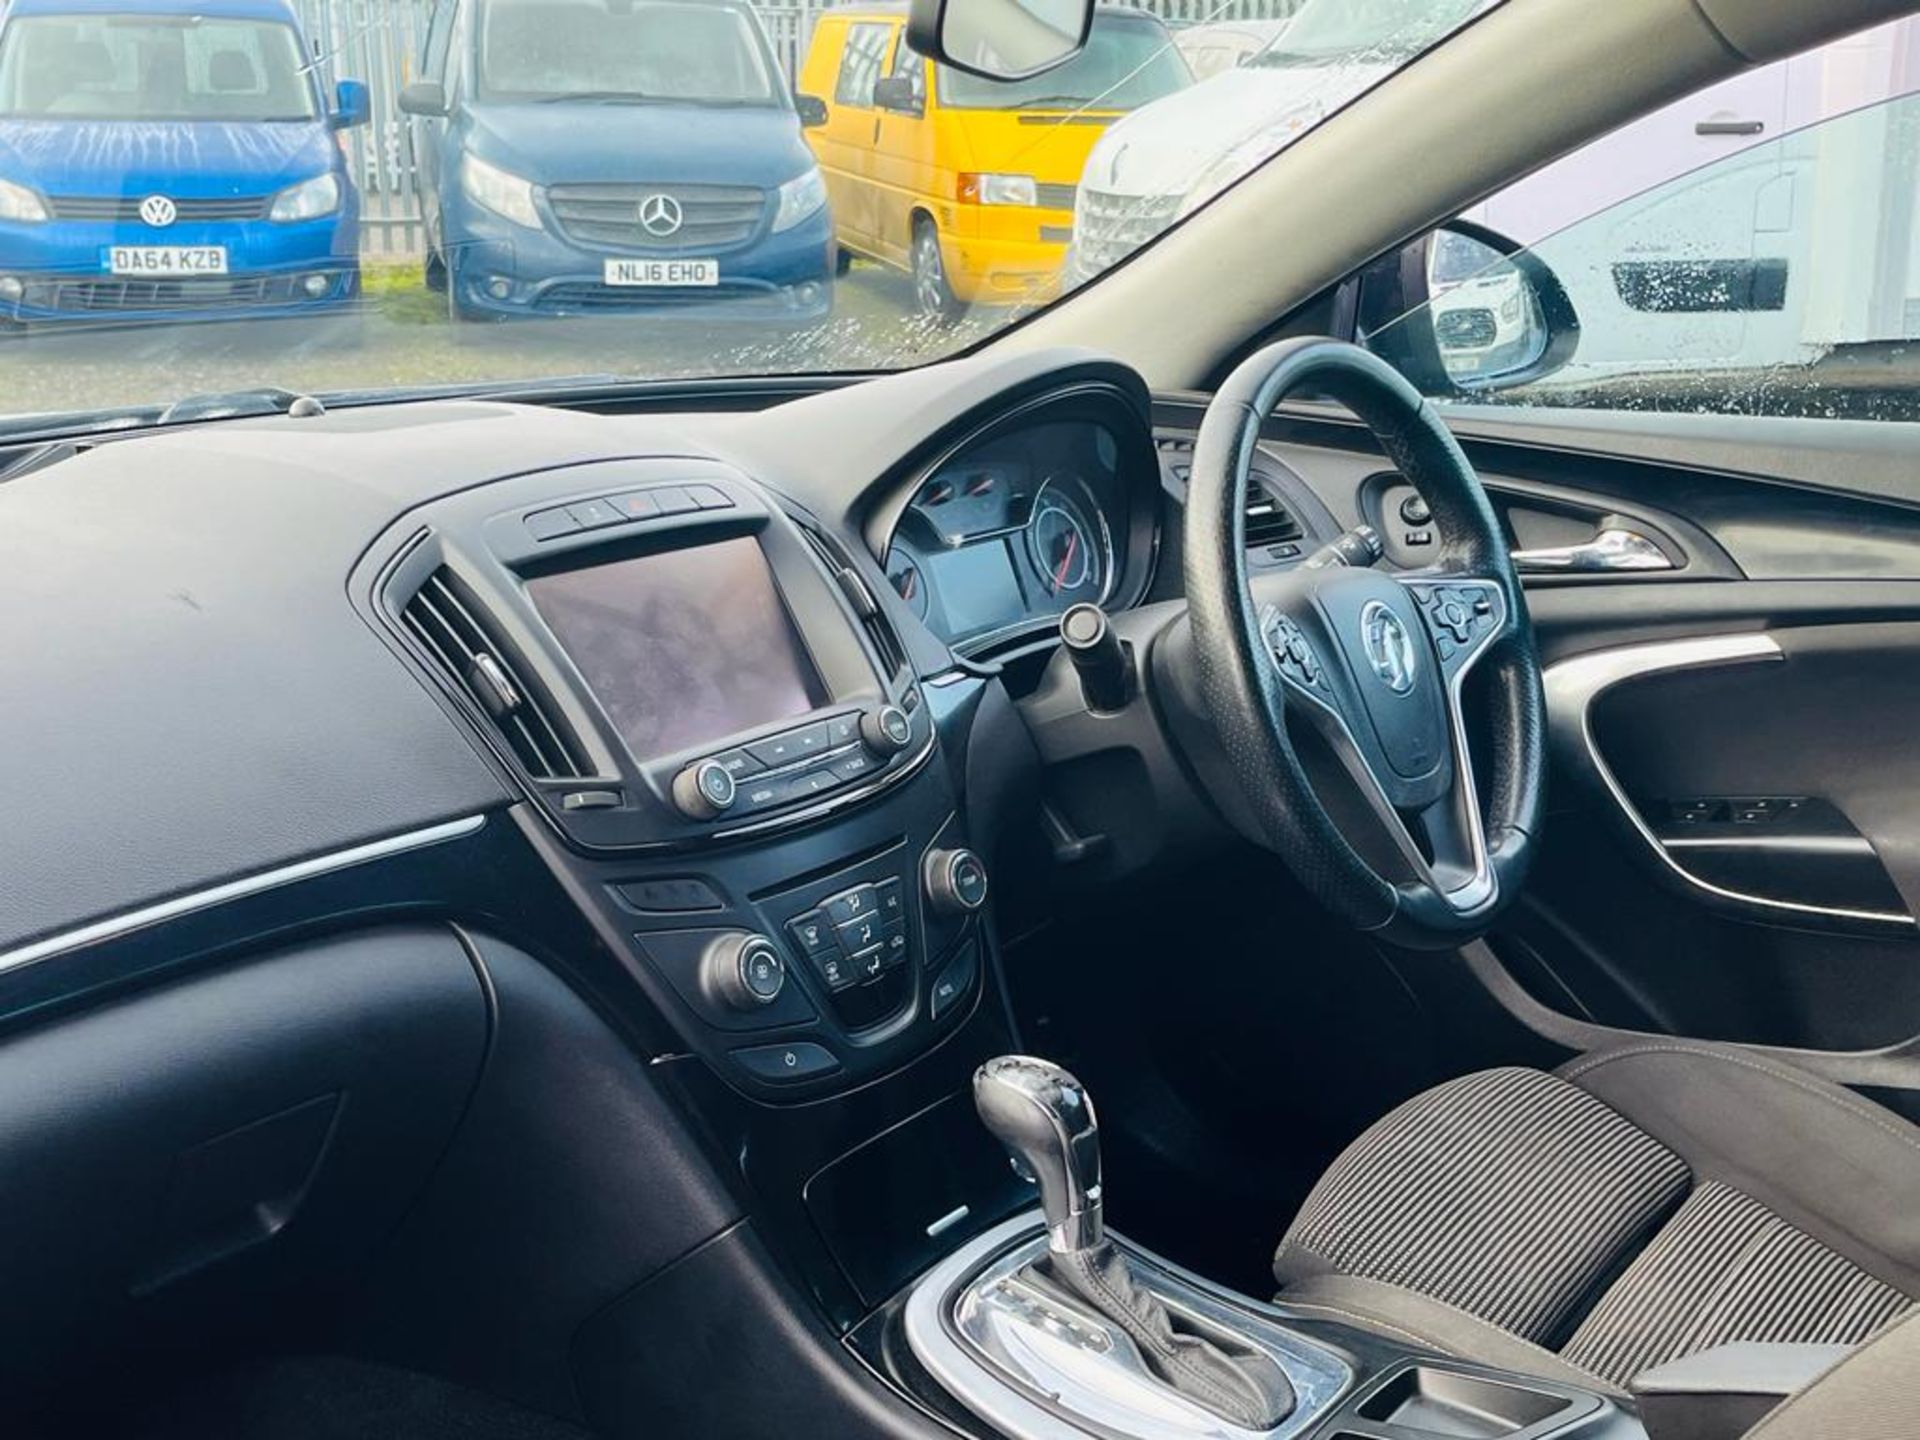 ** ON SALE ** Vauxhall Insignia 2.0 CDTI 163 SRI 2.0 2015 '15 Reg' Automatic - No Vat - Image 24 of 34